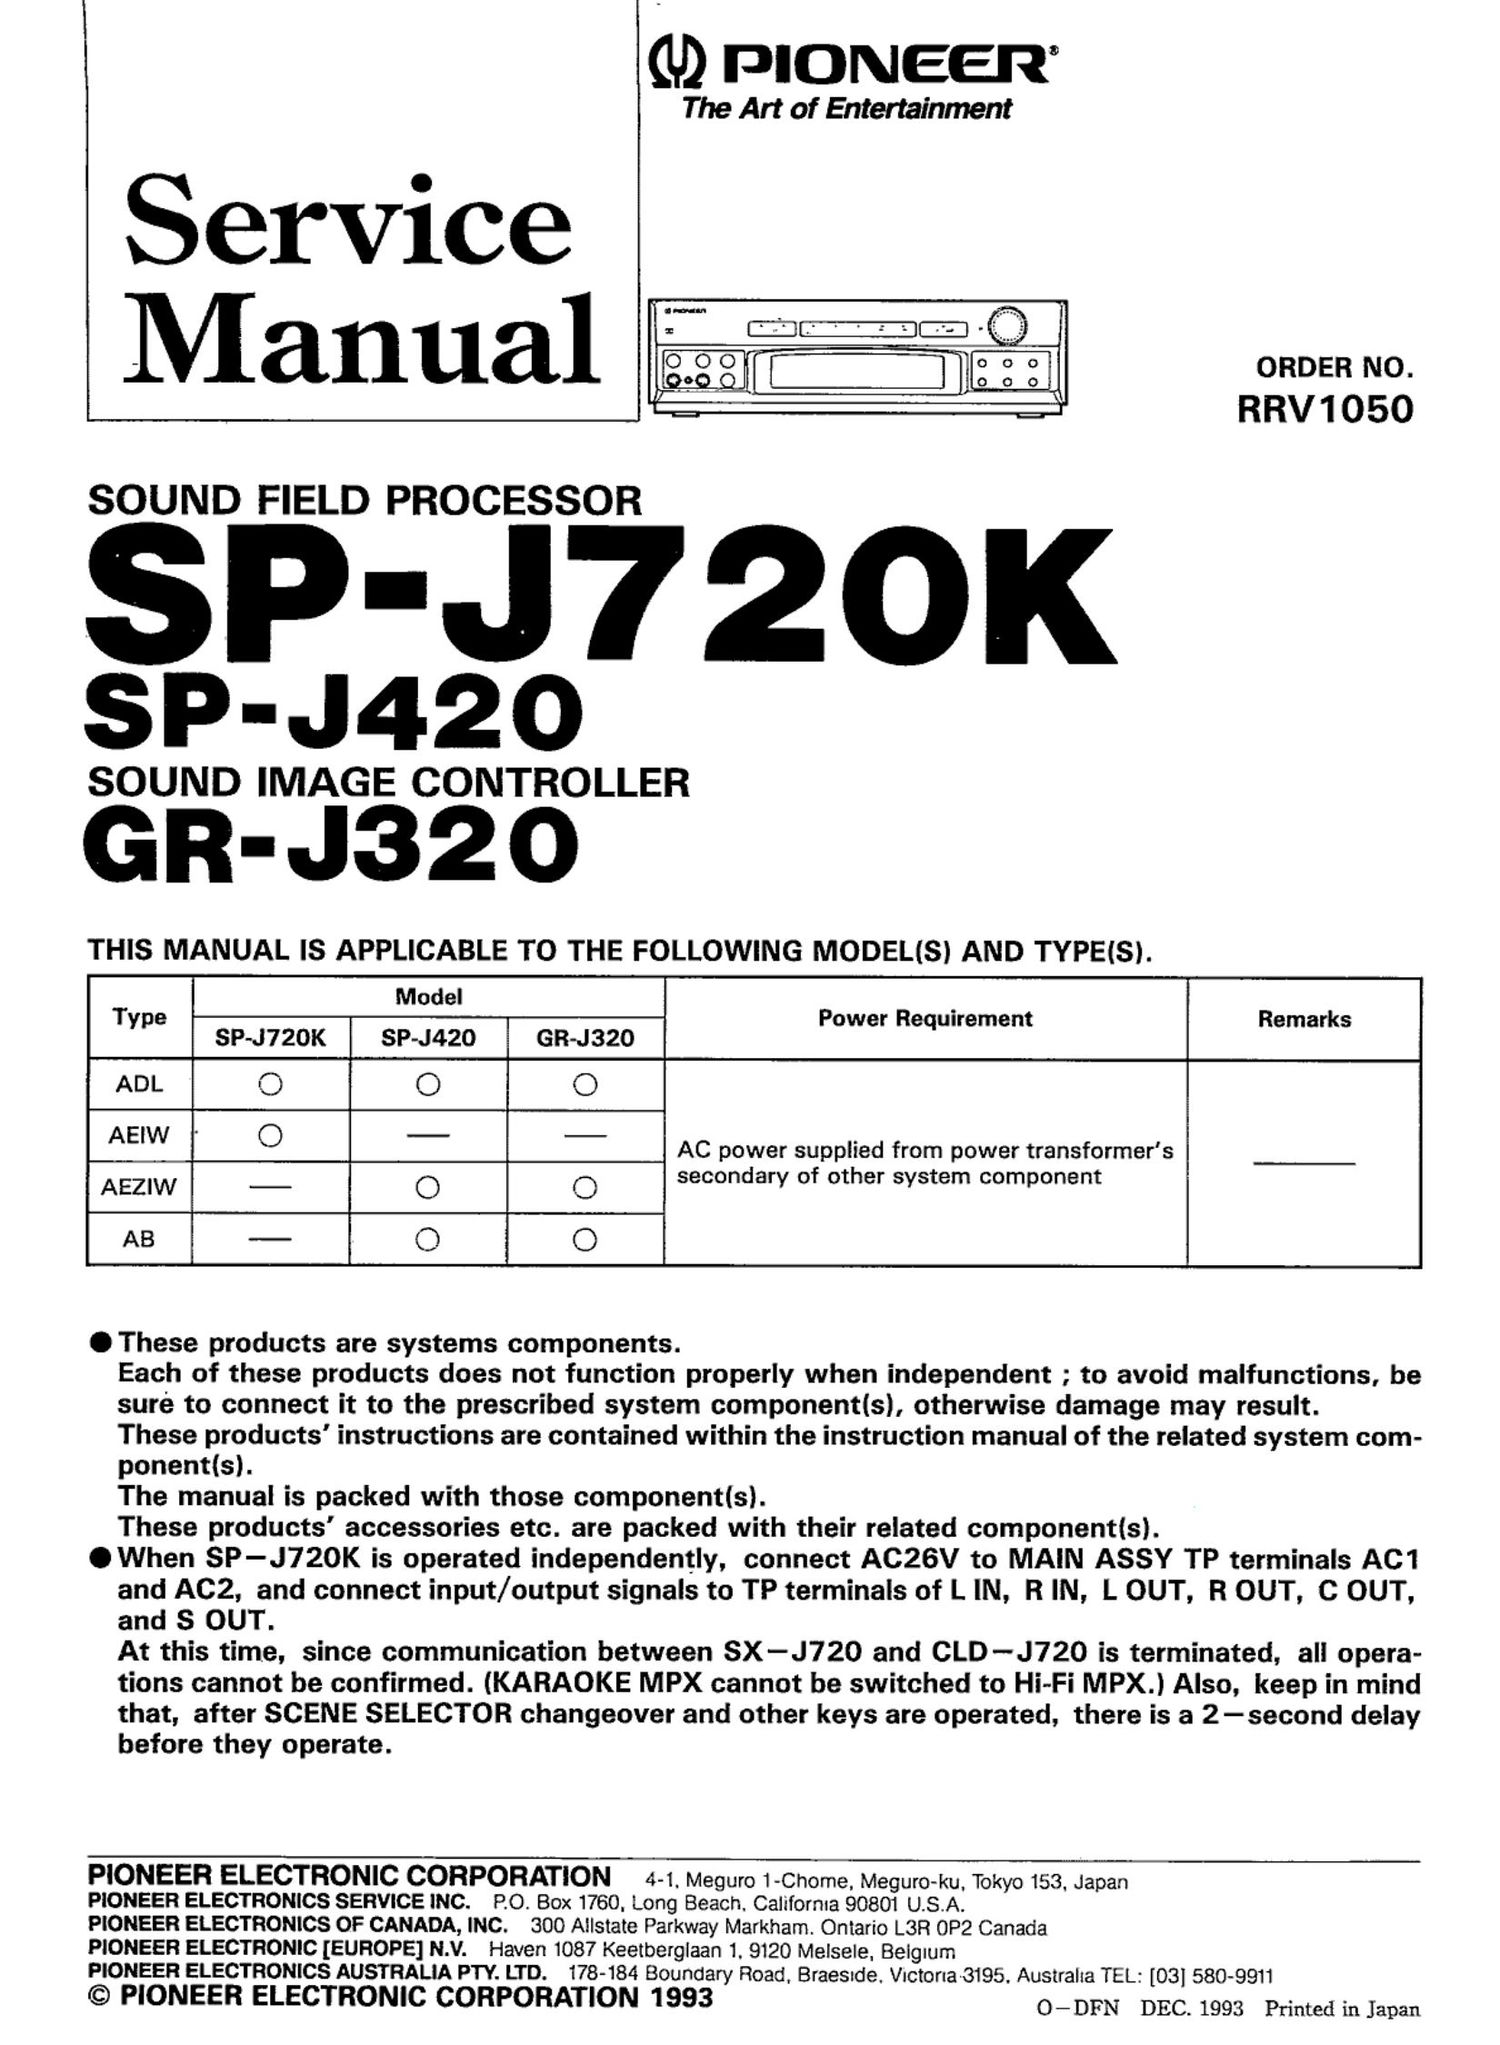 pioneer grj 320 k service manual